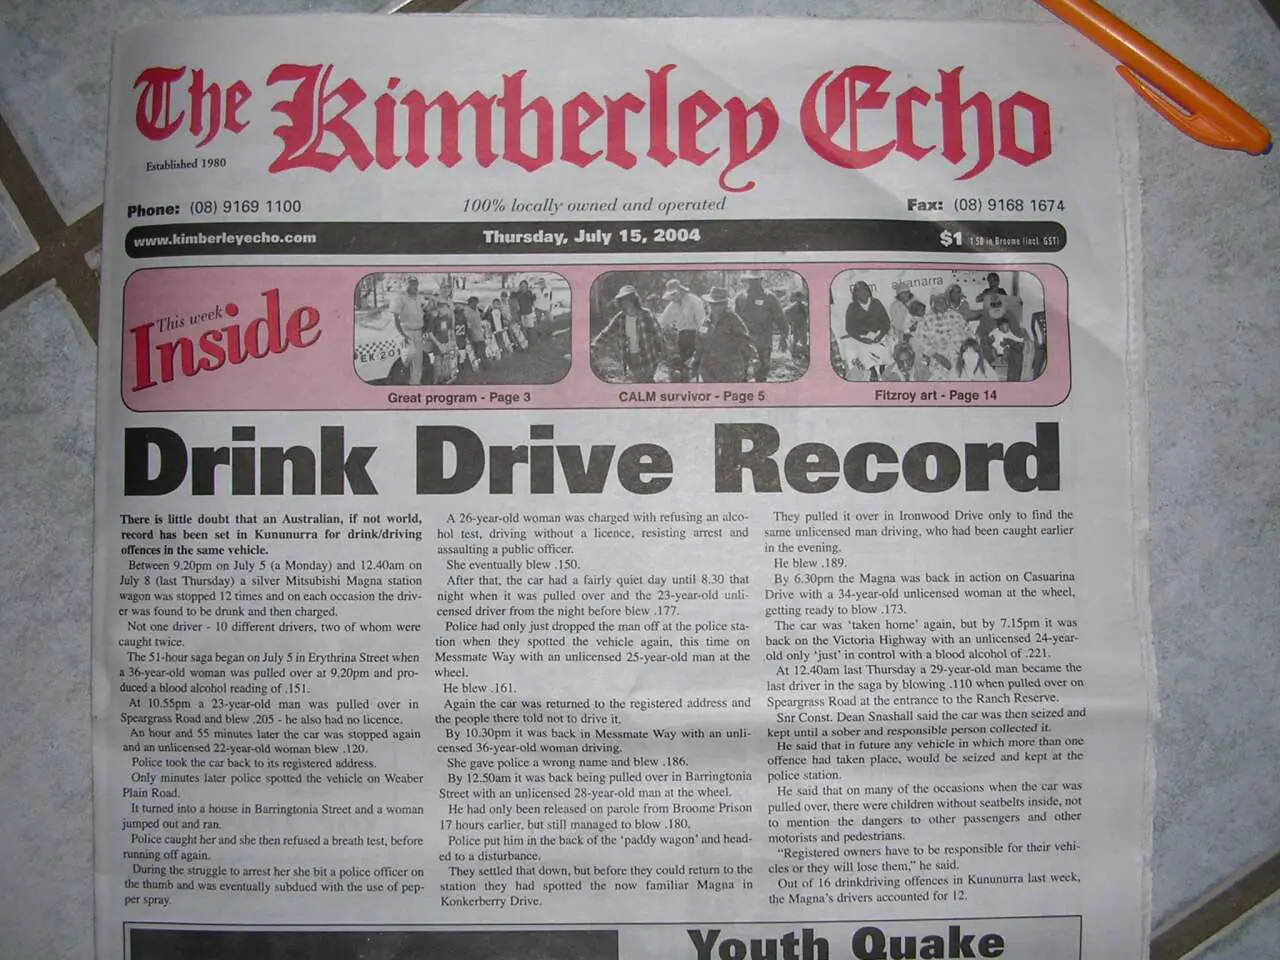 Dui Drink Driving Record | Western Australia | Driving Under The Influence (Dui) -The Drink Driving Record! | Western Australia | Author: Anthony Bianco - The Travel Tart Blog